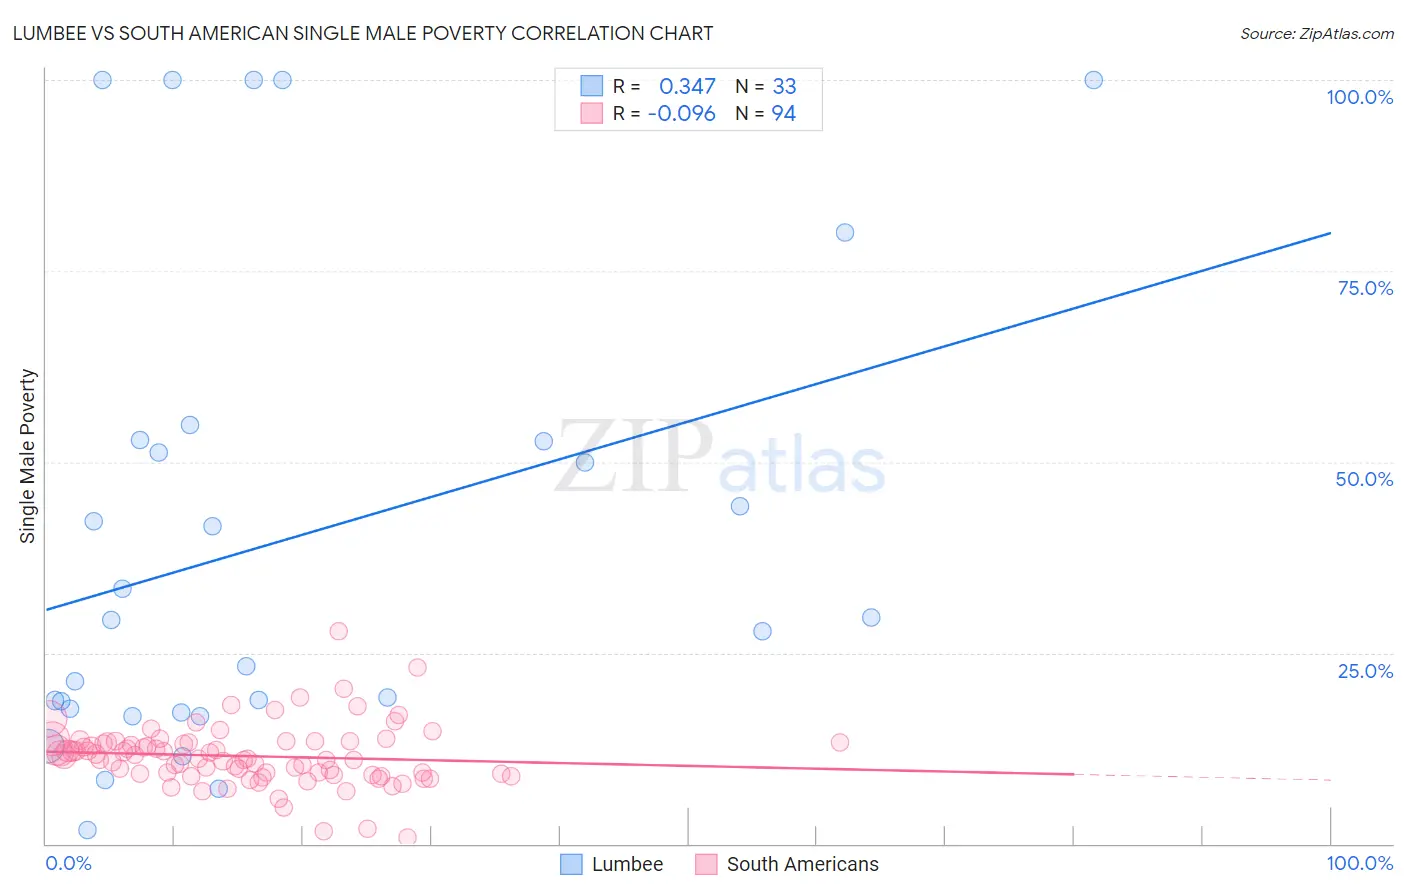 Lumbee vs South American Single Male Poverty